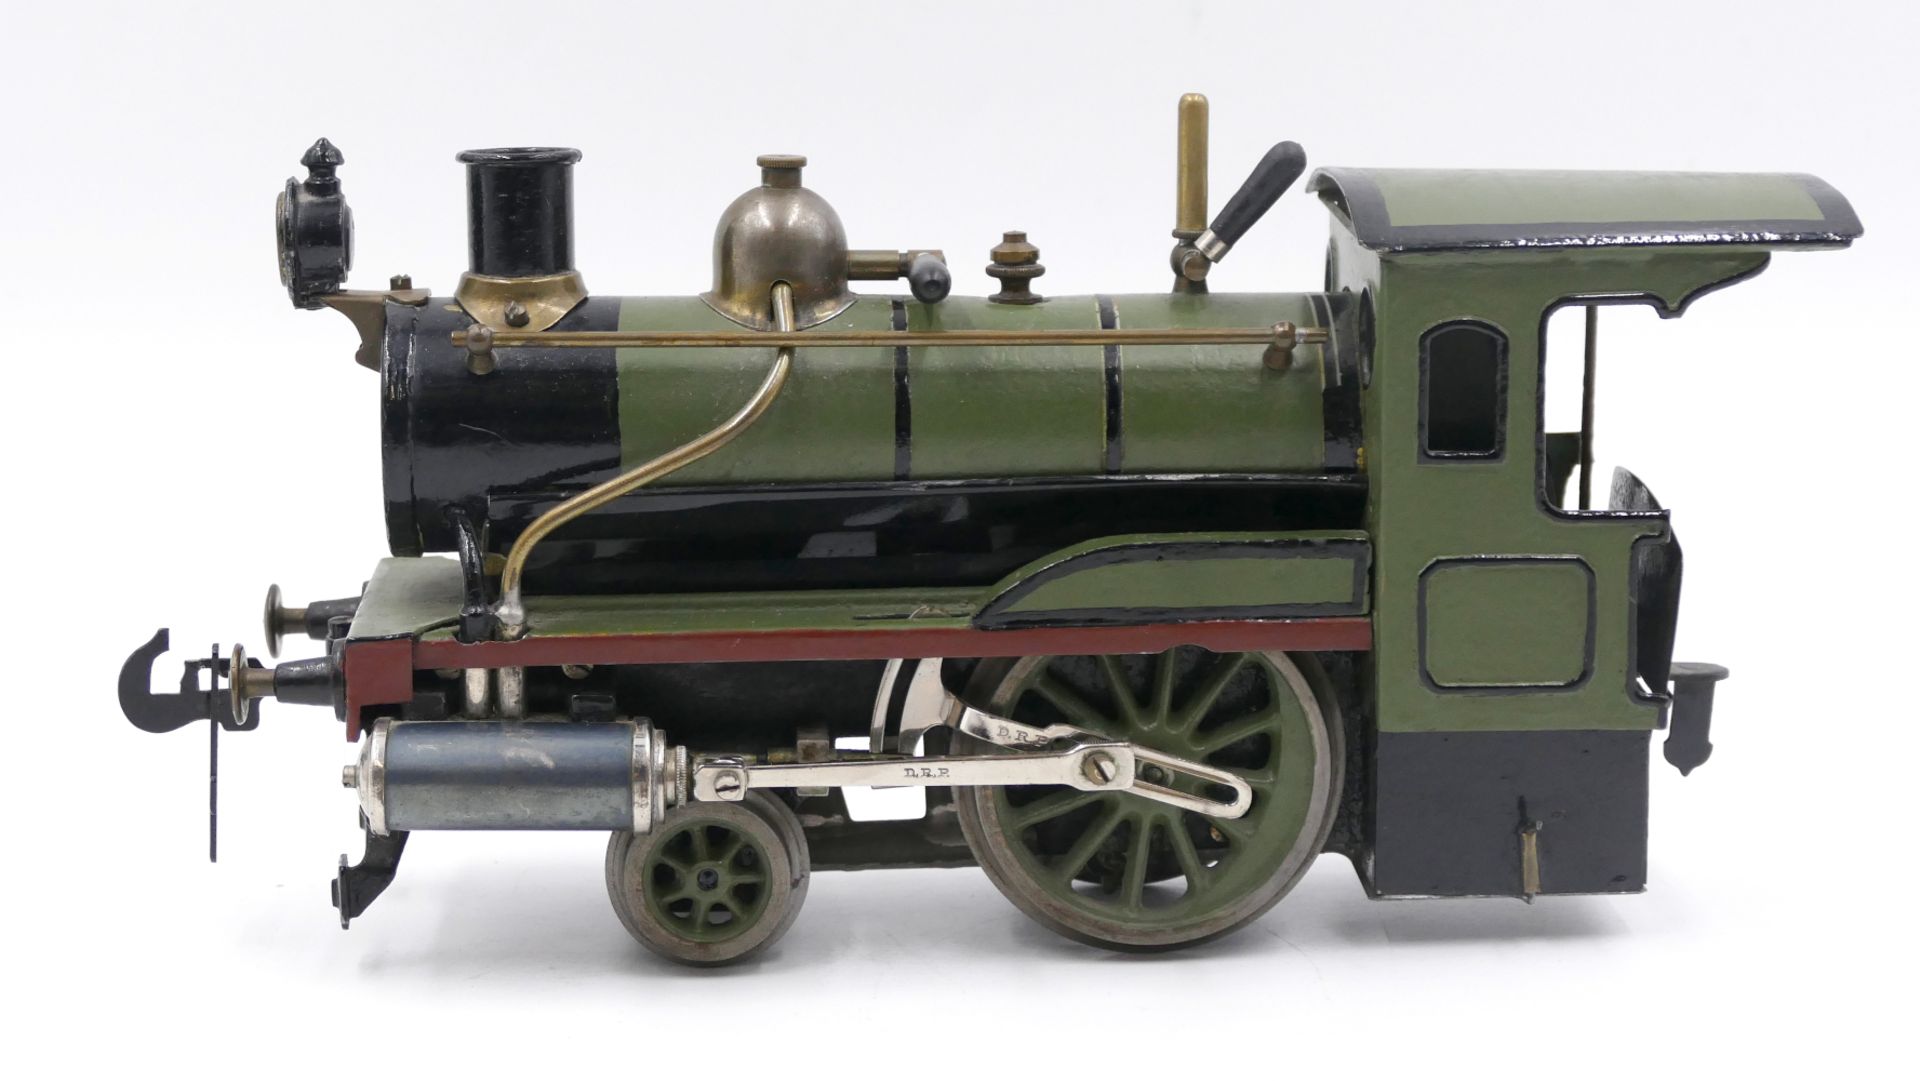 1 Dampflokomotive mit Spiritusantrieb wohl Georges CARETTE Nürnberg, Anfang 20. Jh., grün-schwarz be